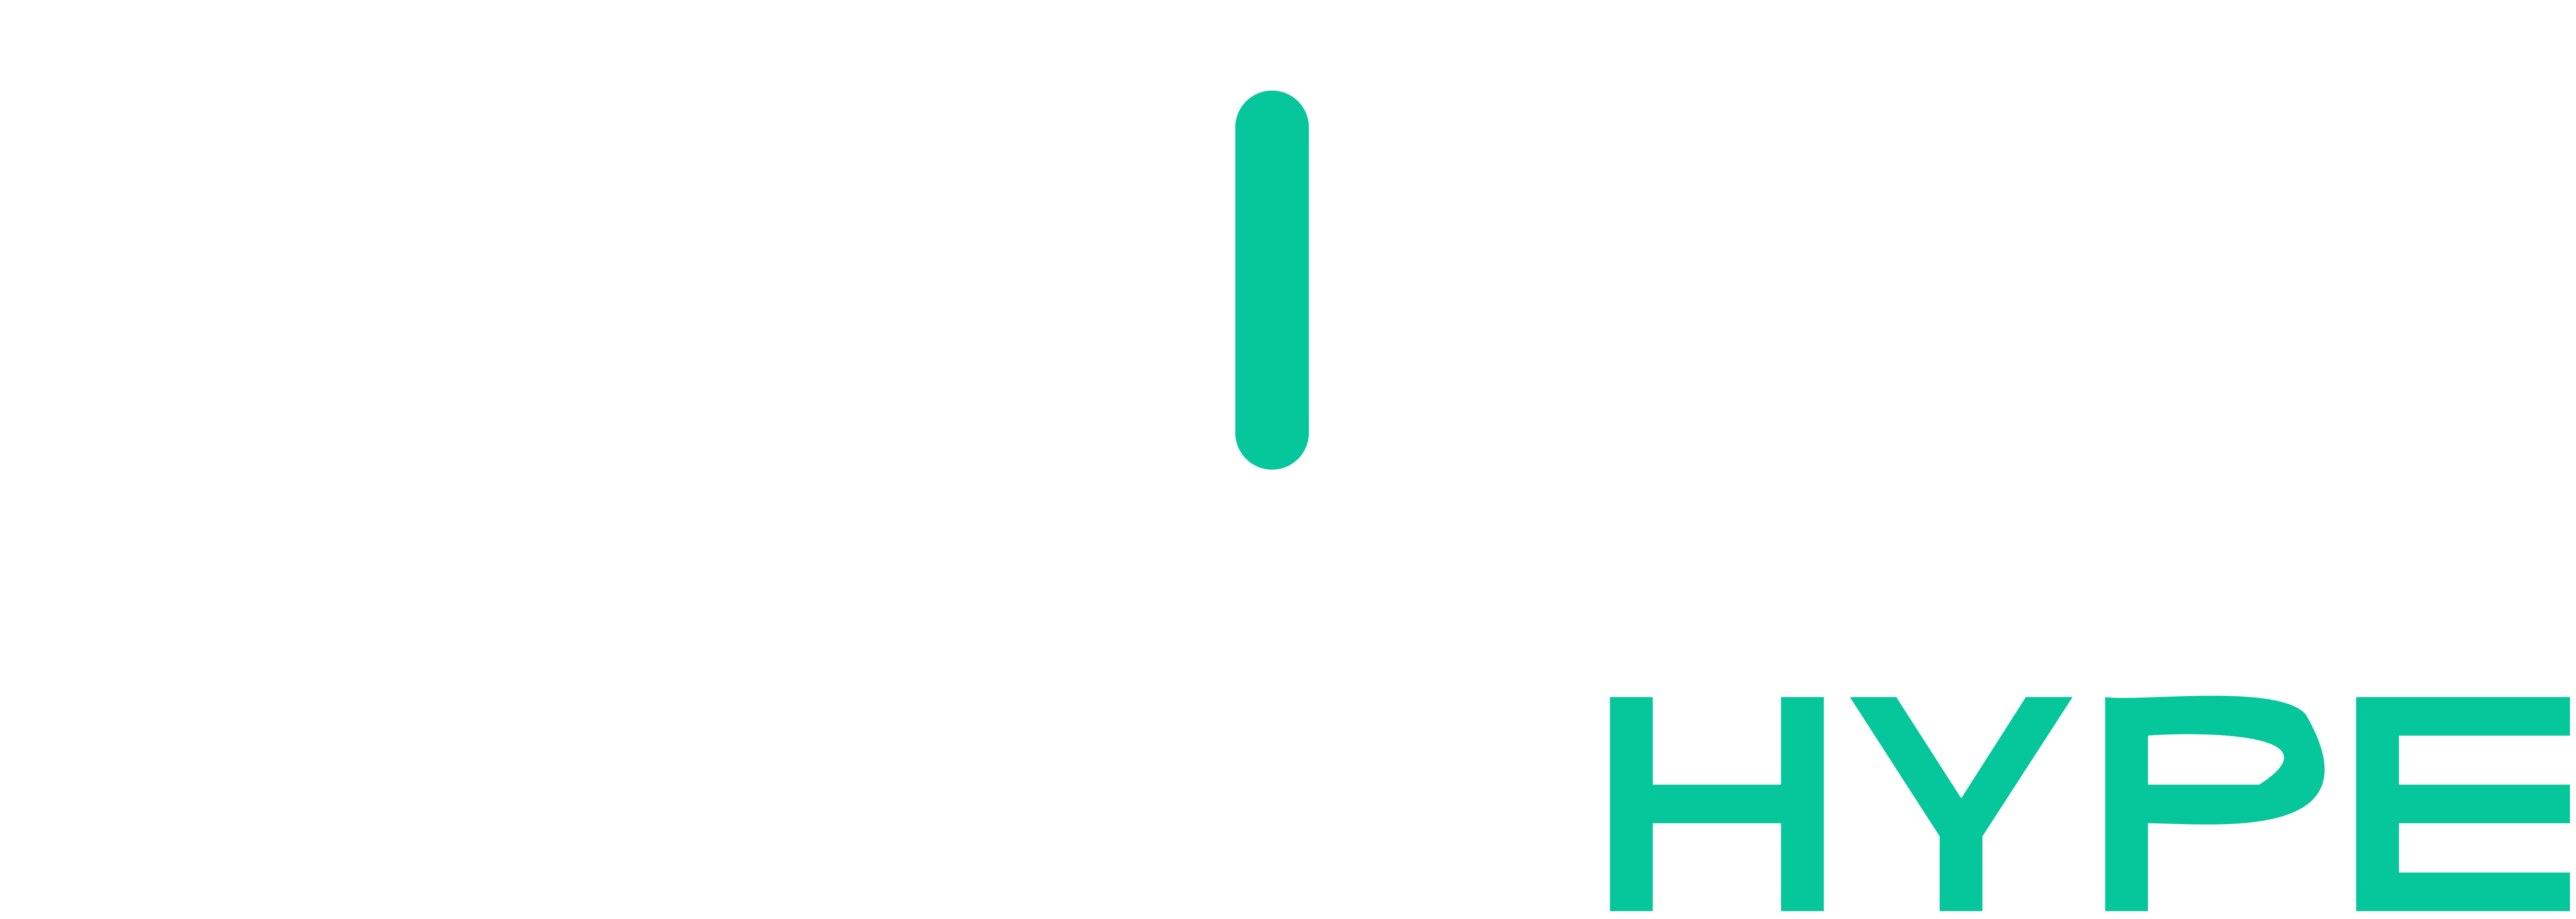 Binary Hype Logo